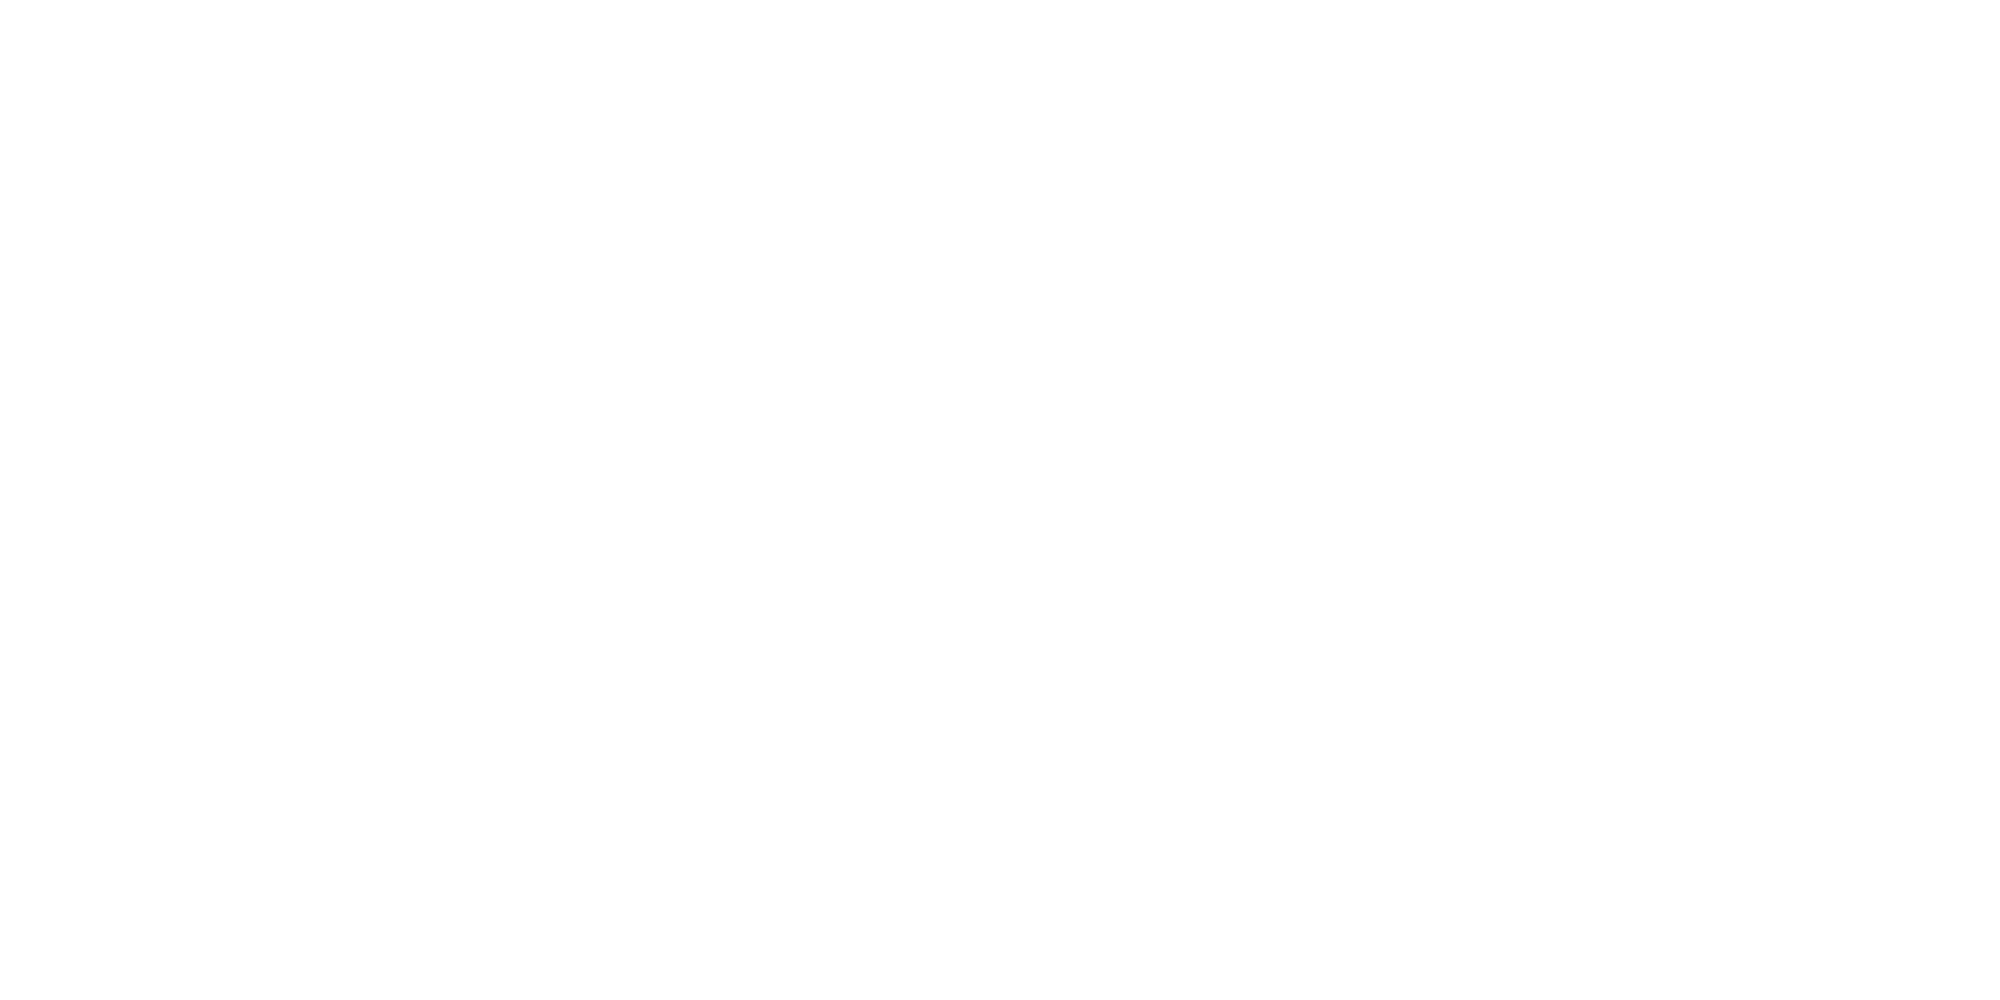 E-Style